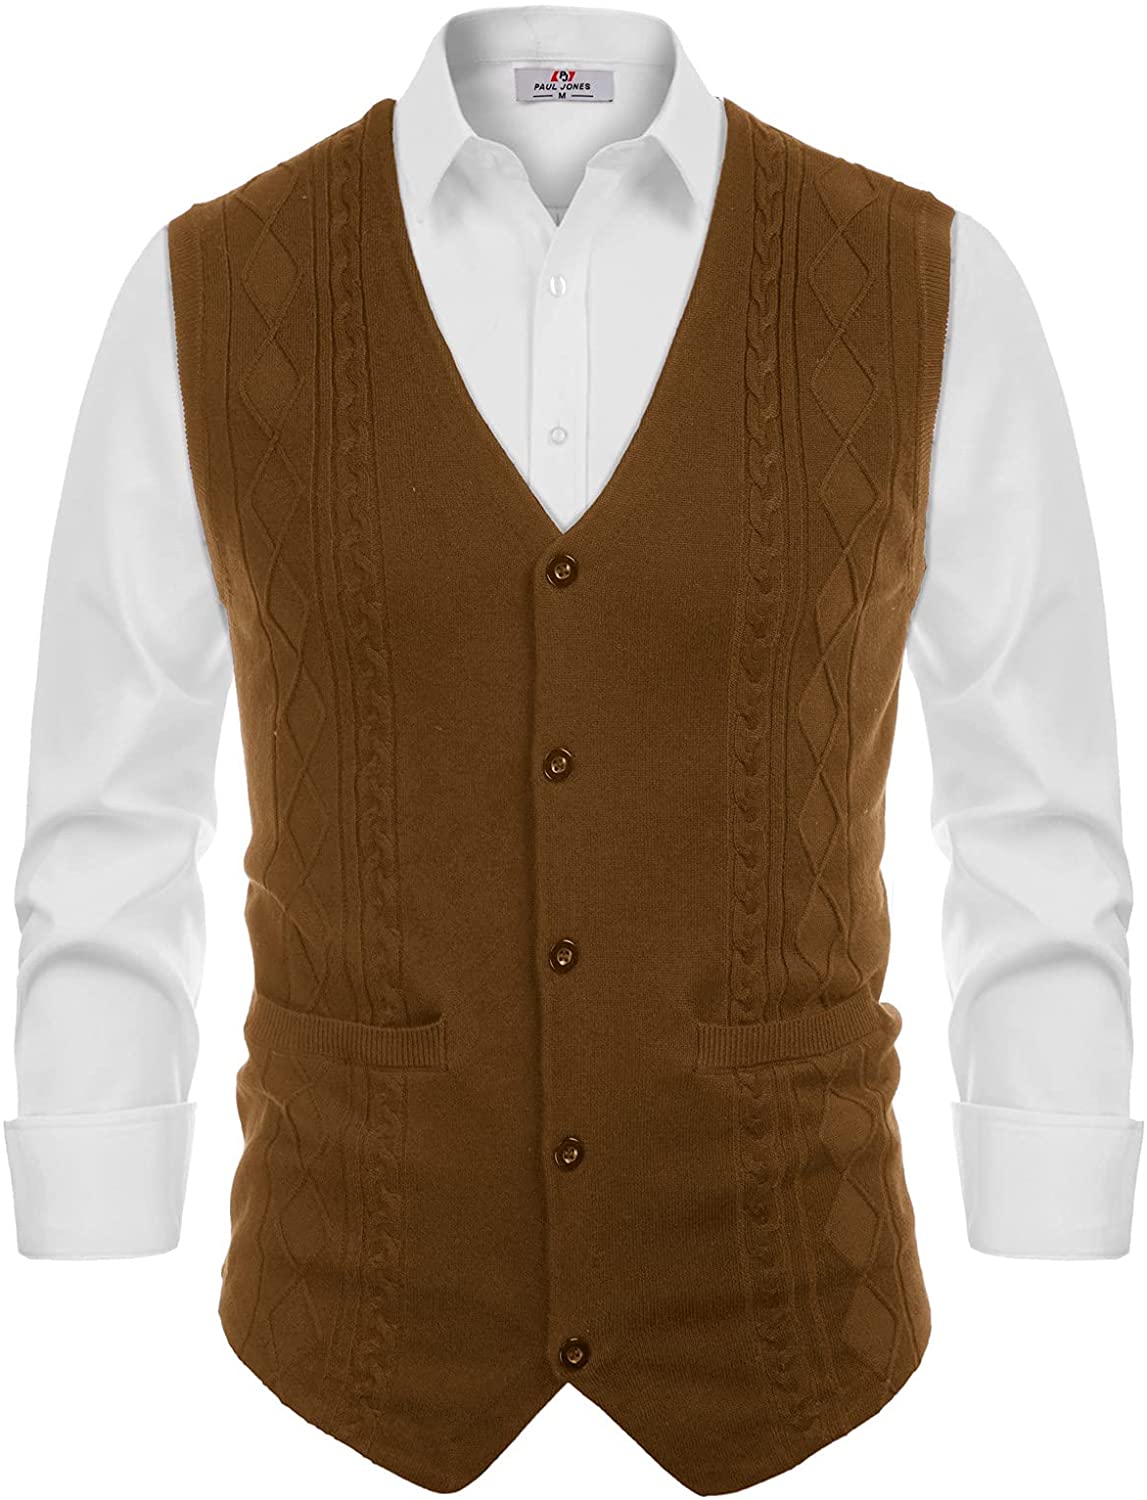 PJ PAUL JONES Mens Cable Knit Sweater Vest Button Down V Neck Slim Fit Sweater Vests Knitwear 